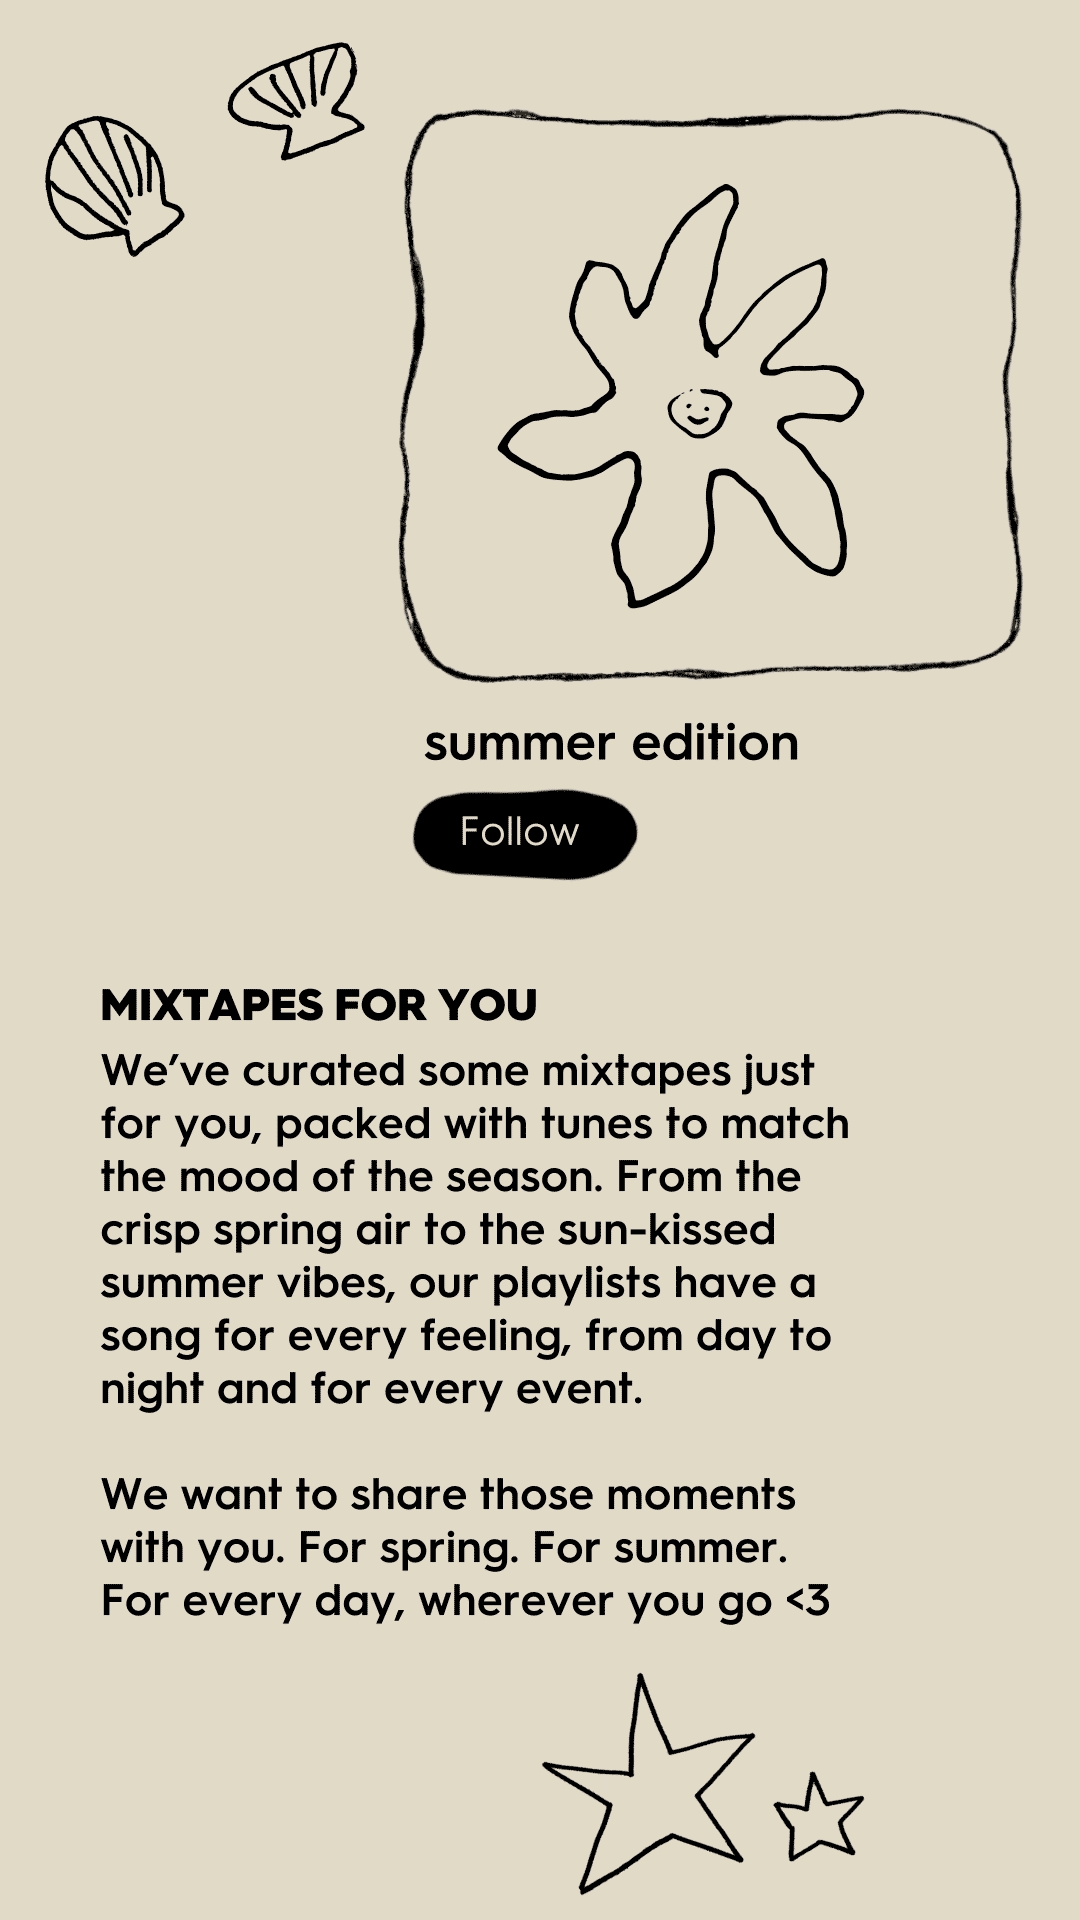 Summer edition